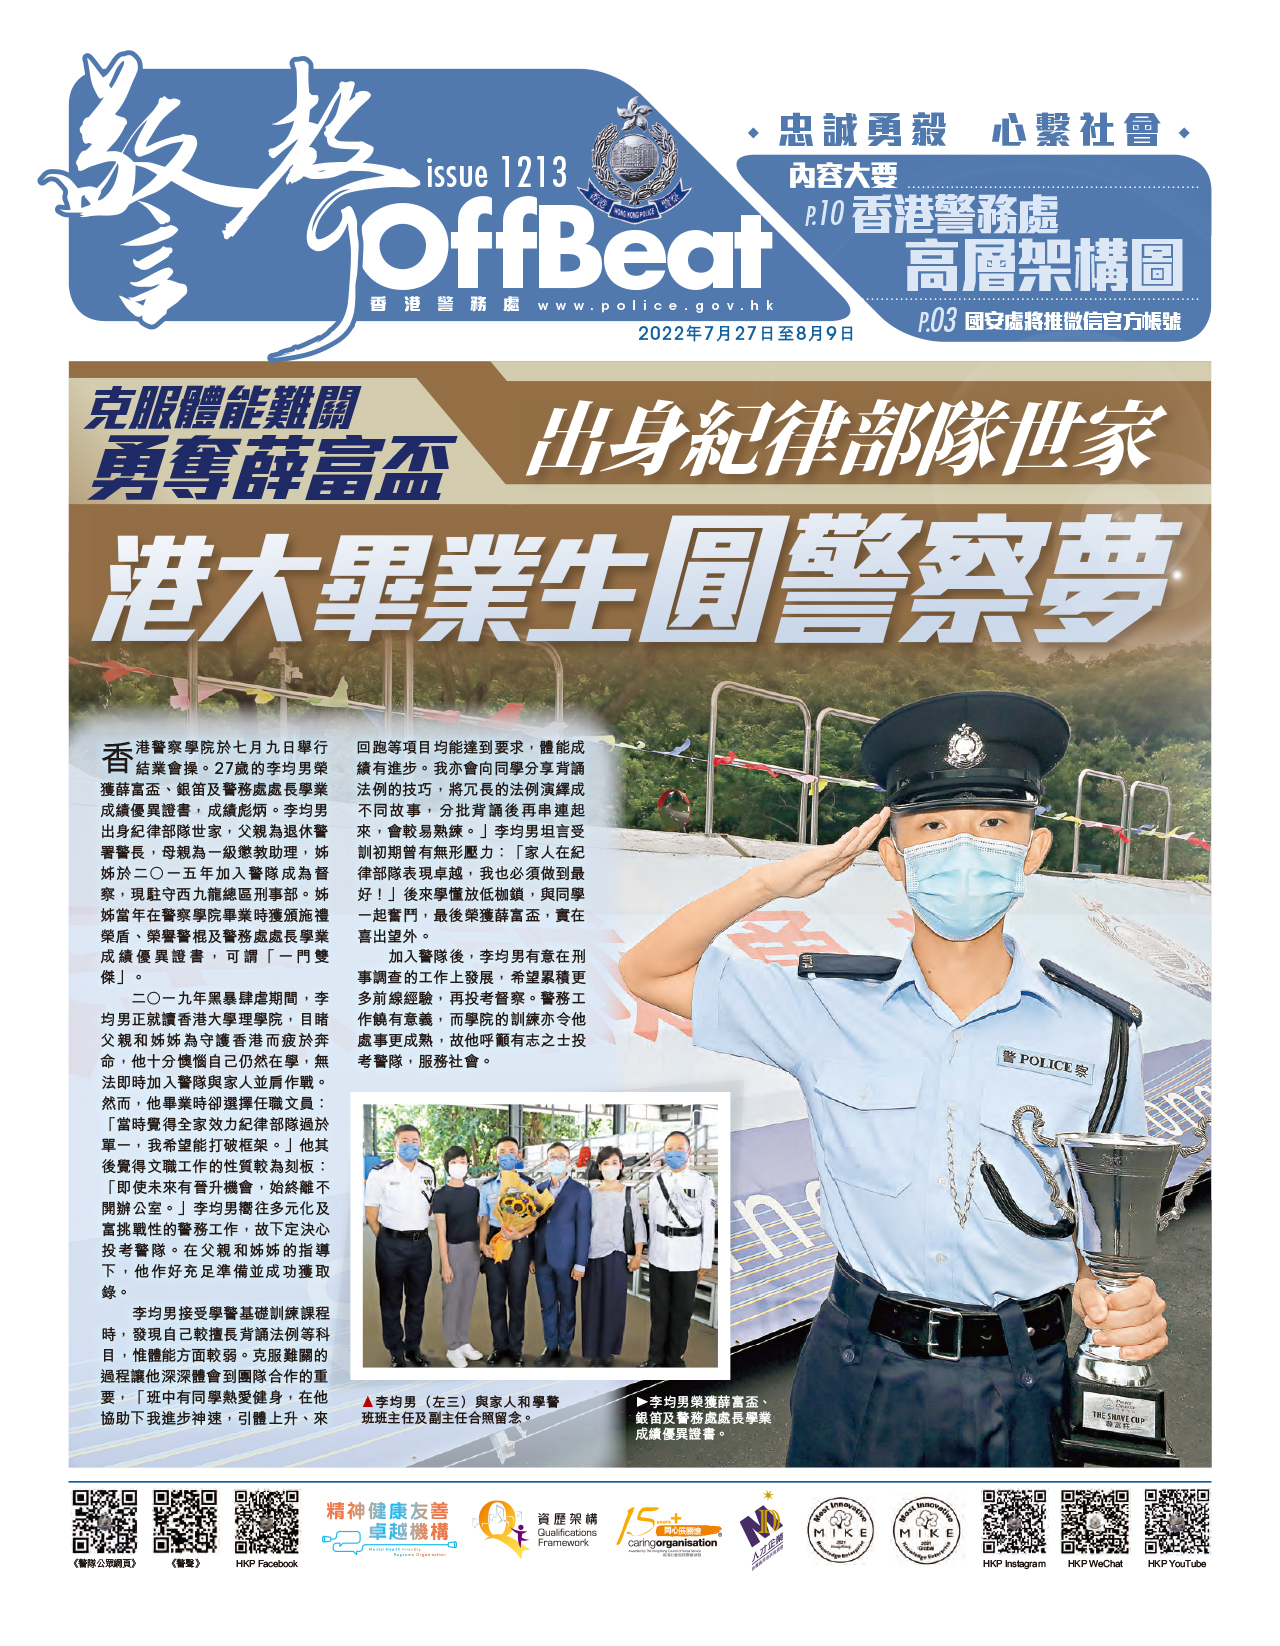 Offbeat Issue 1213 (July 27 – August 9, 2022) 克服體能難關勇奪薛富 